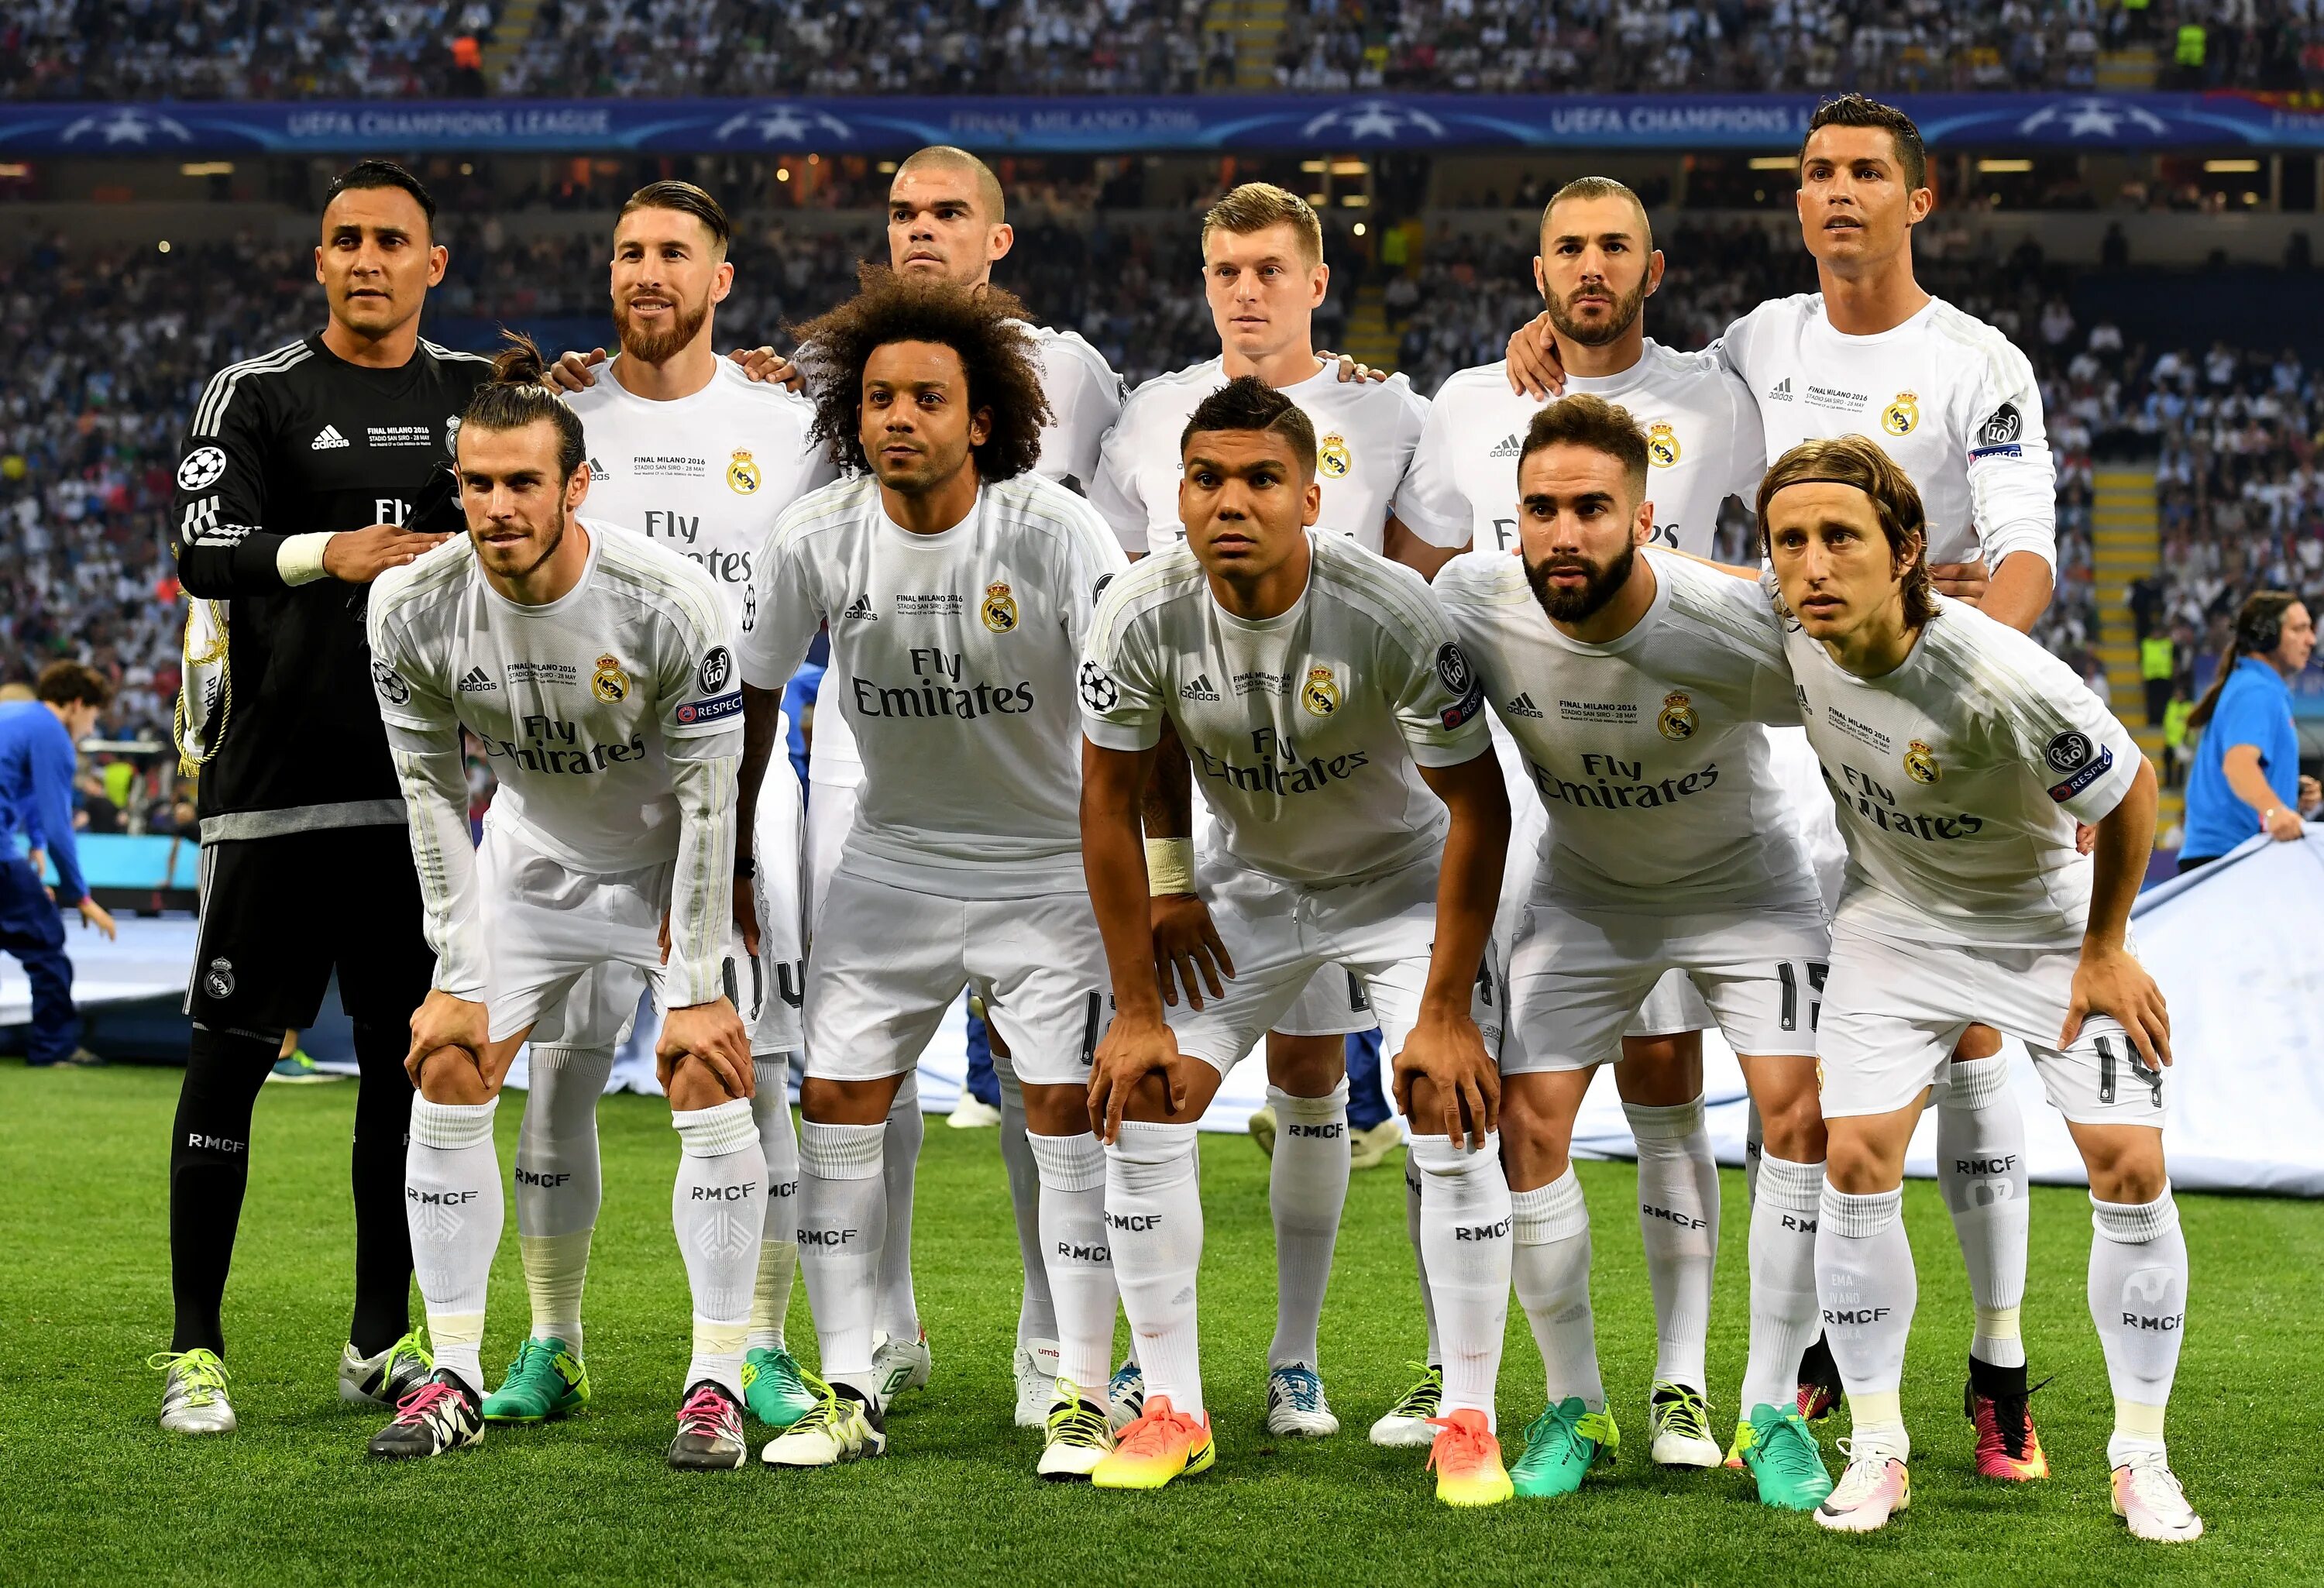 Команда Реал Мадрид 2016. Команда Реал Мадрид 2015. Фото команды Реал Мадрид 2016. Состав Реал Мадрида 2016 года. 4 июня 2017 год